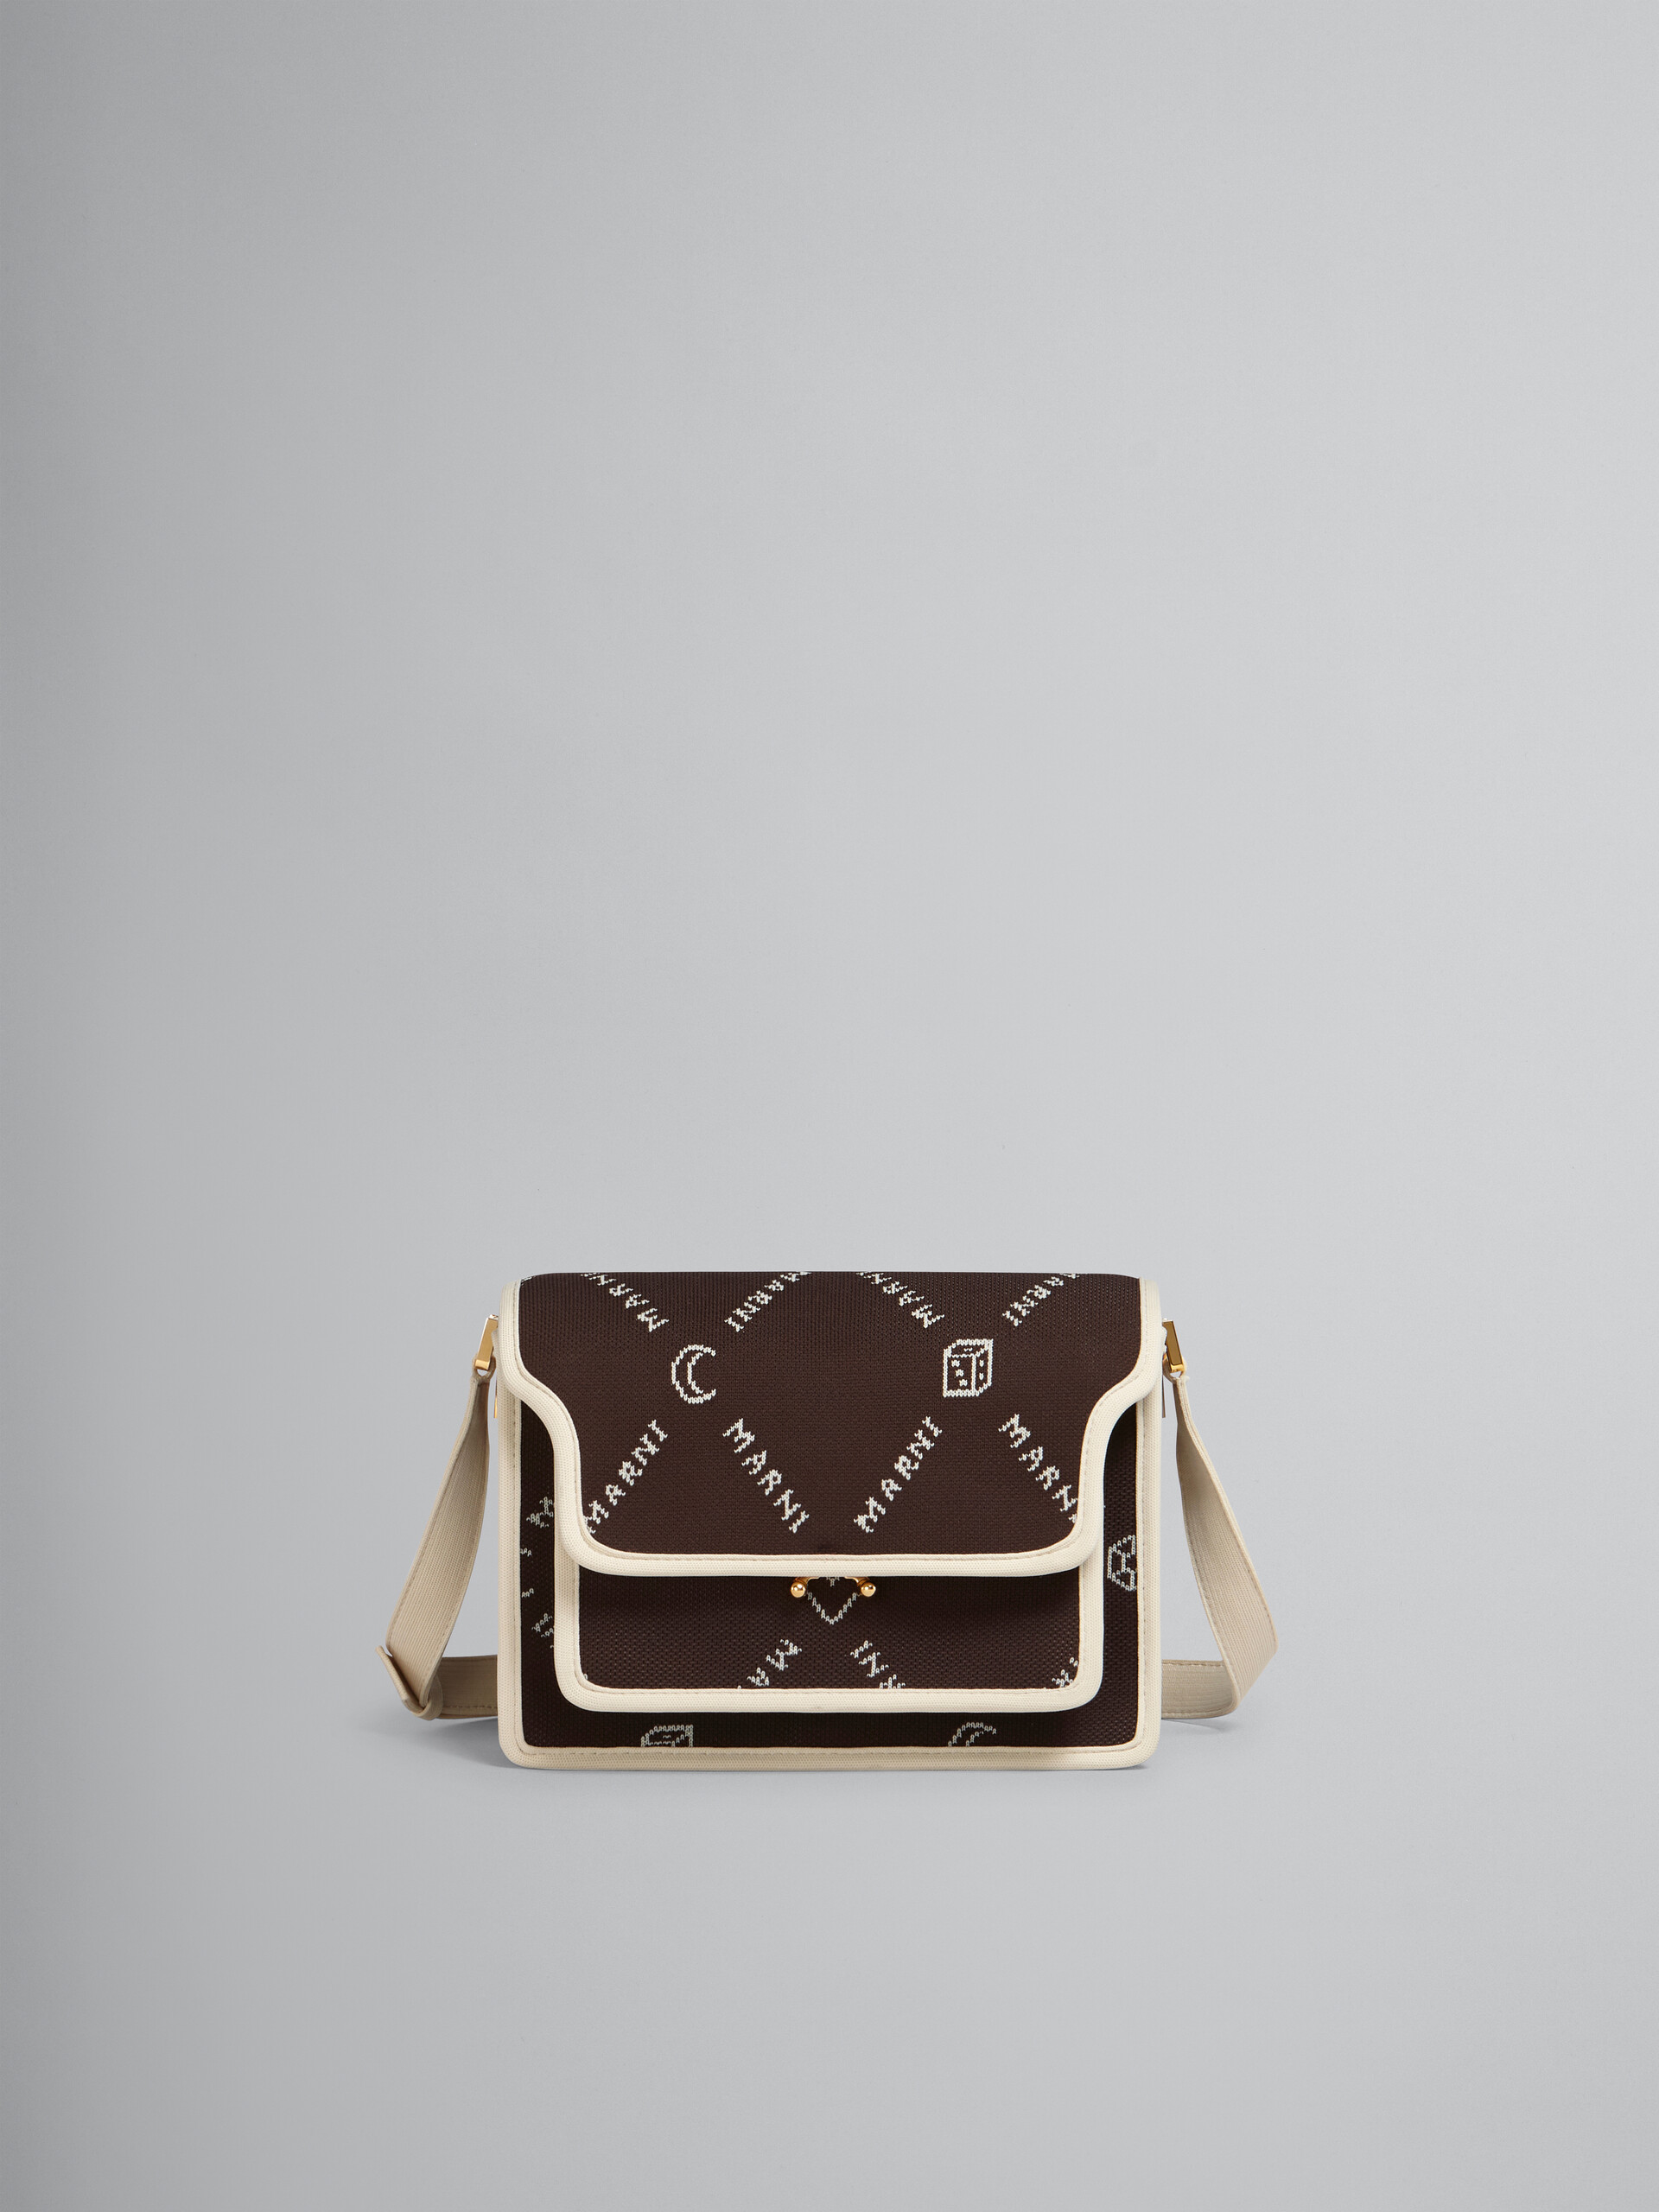 TRUNK SOFT medium bag in brown Marnigram jacquard - Shoulder Bag - Image 1